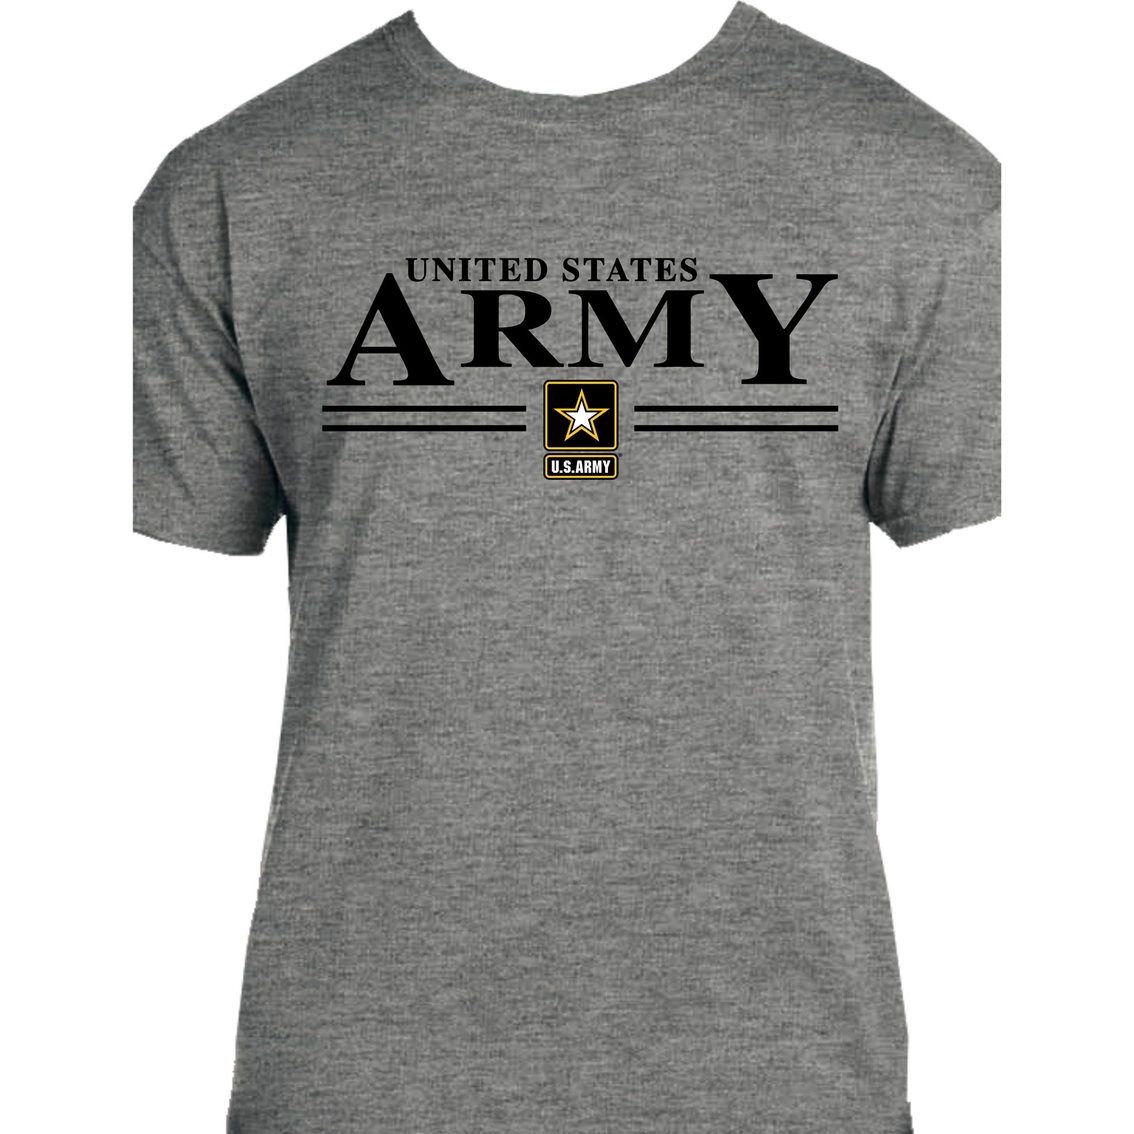 United States Army, Army Star Logo Graphite Heather T Shirt | Clothing ...